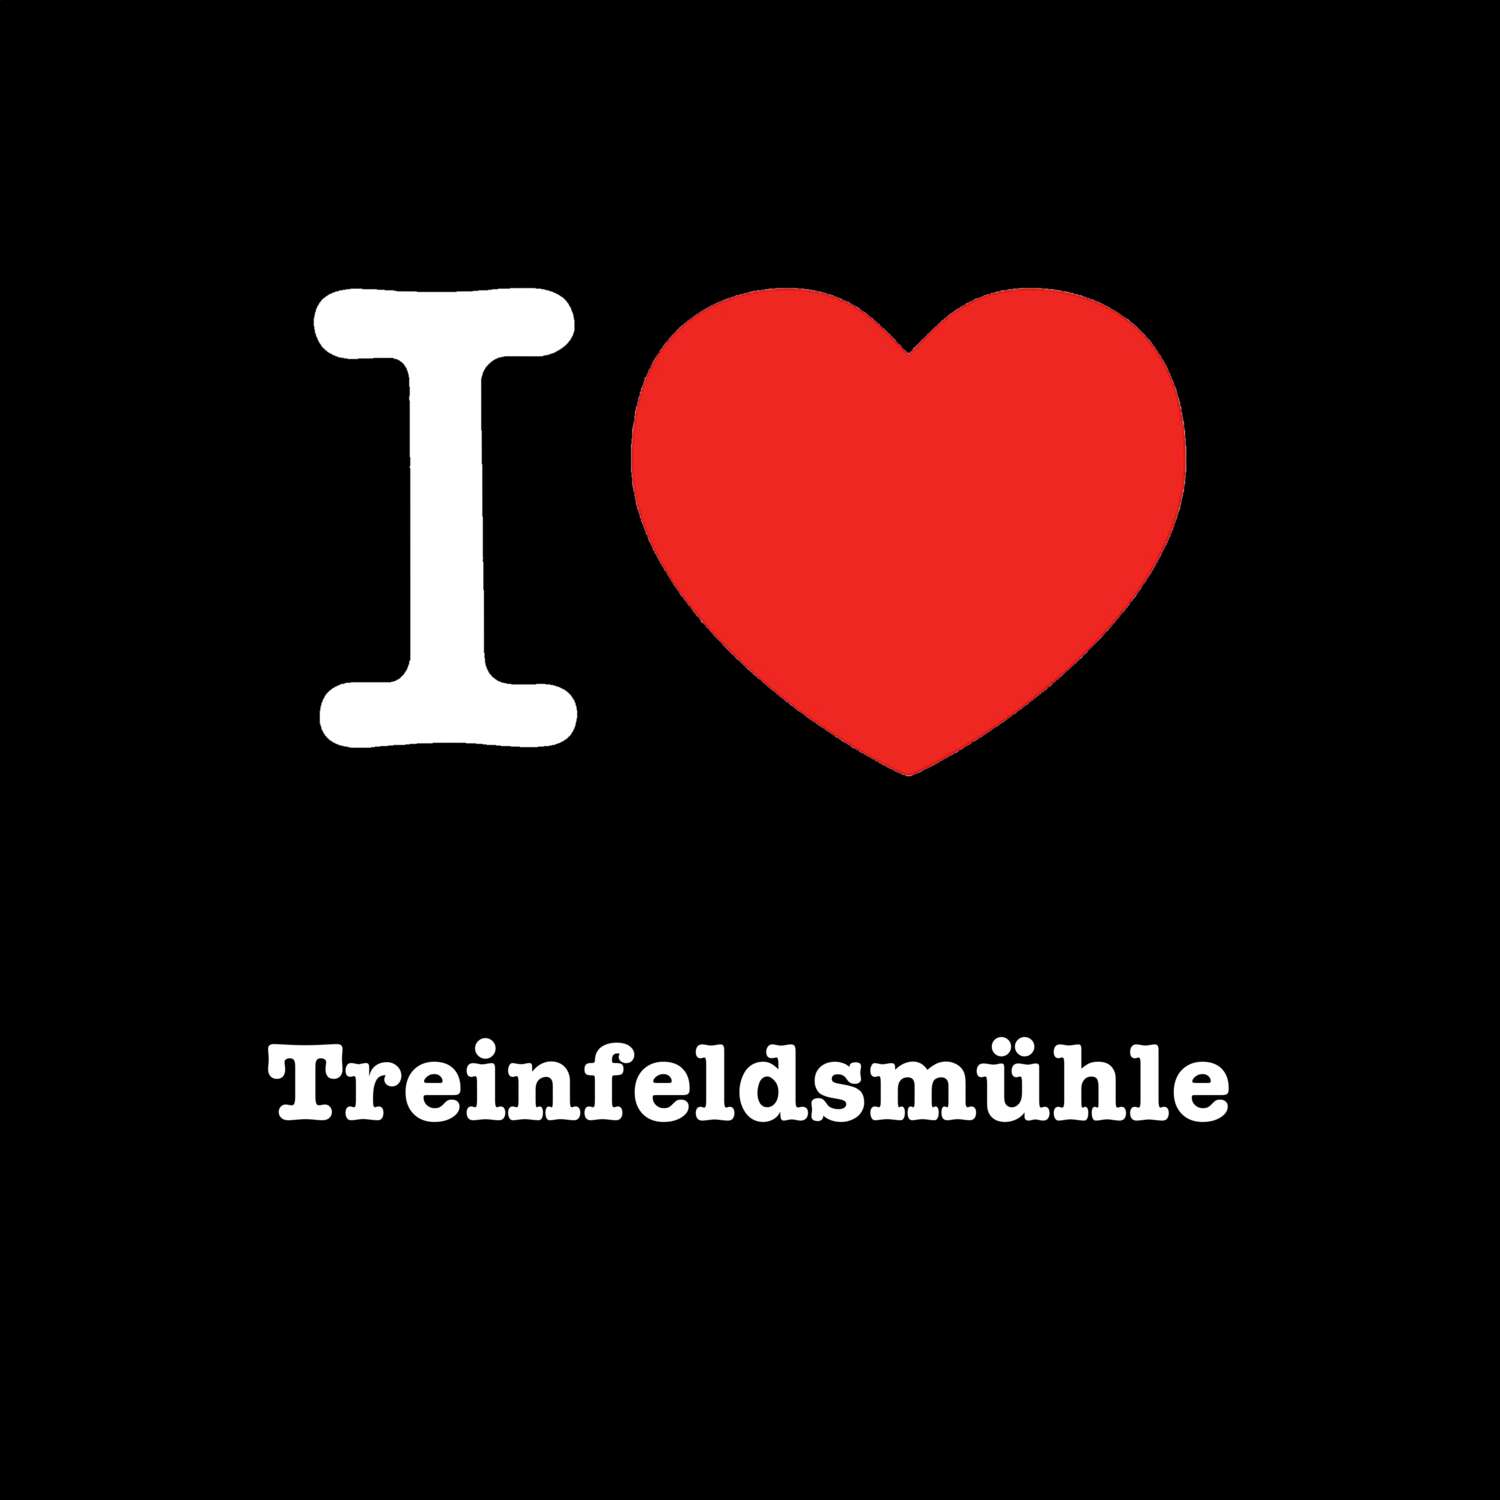 Treinfeldsmühle T-Shirt »I love«